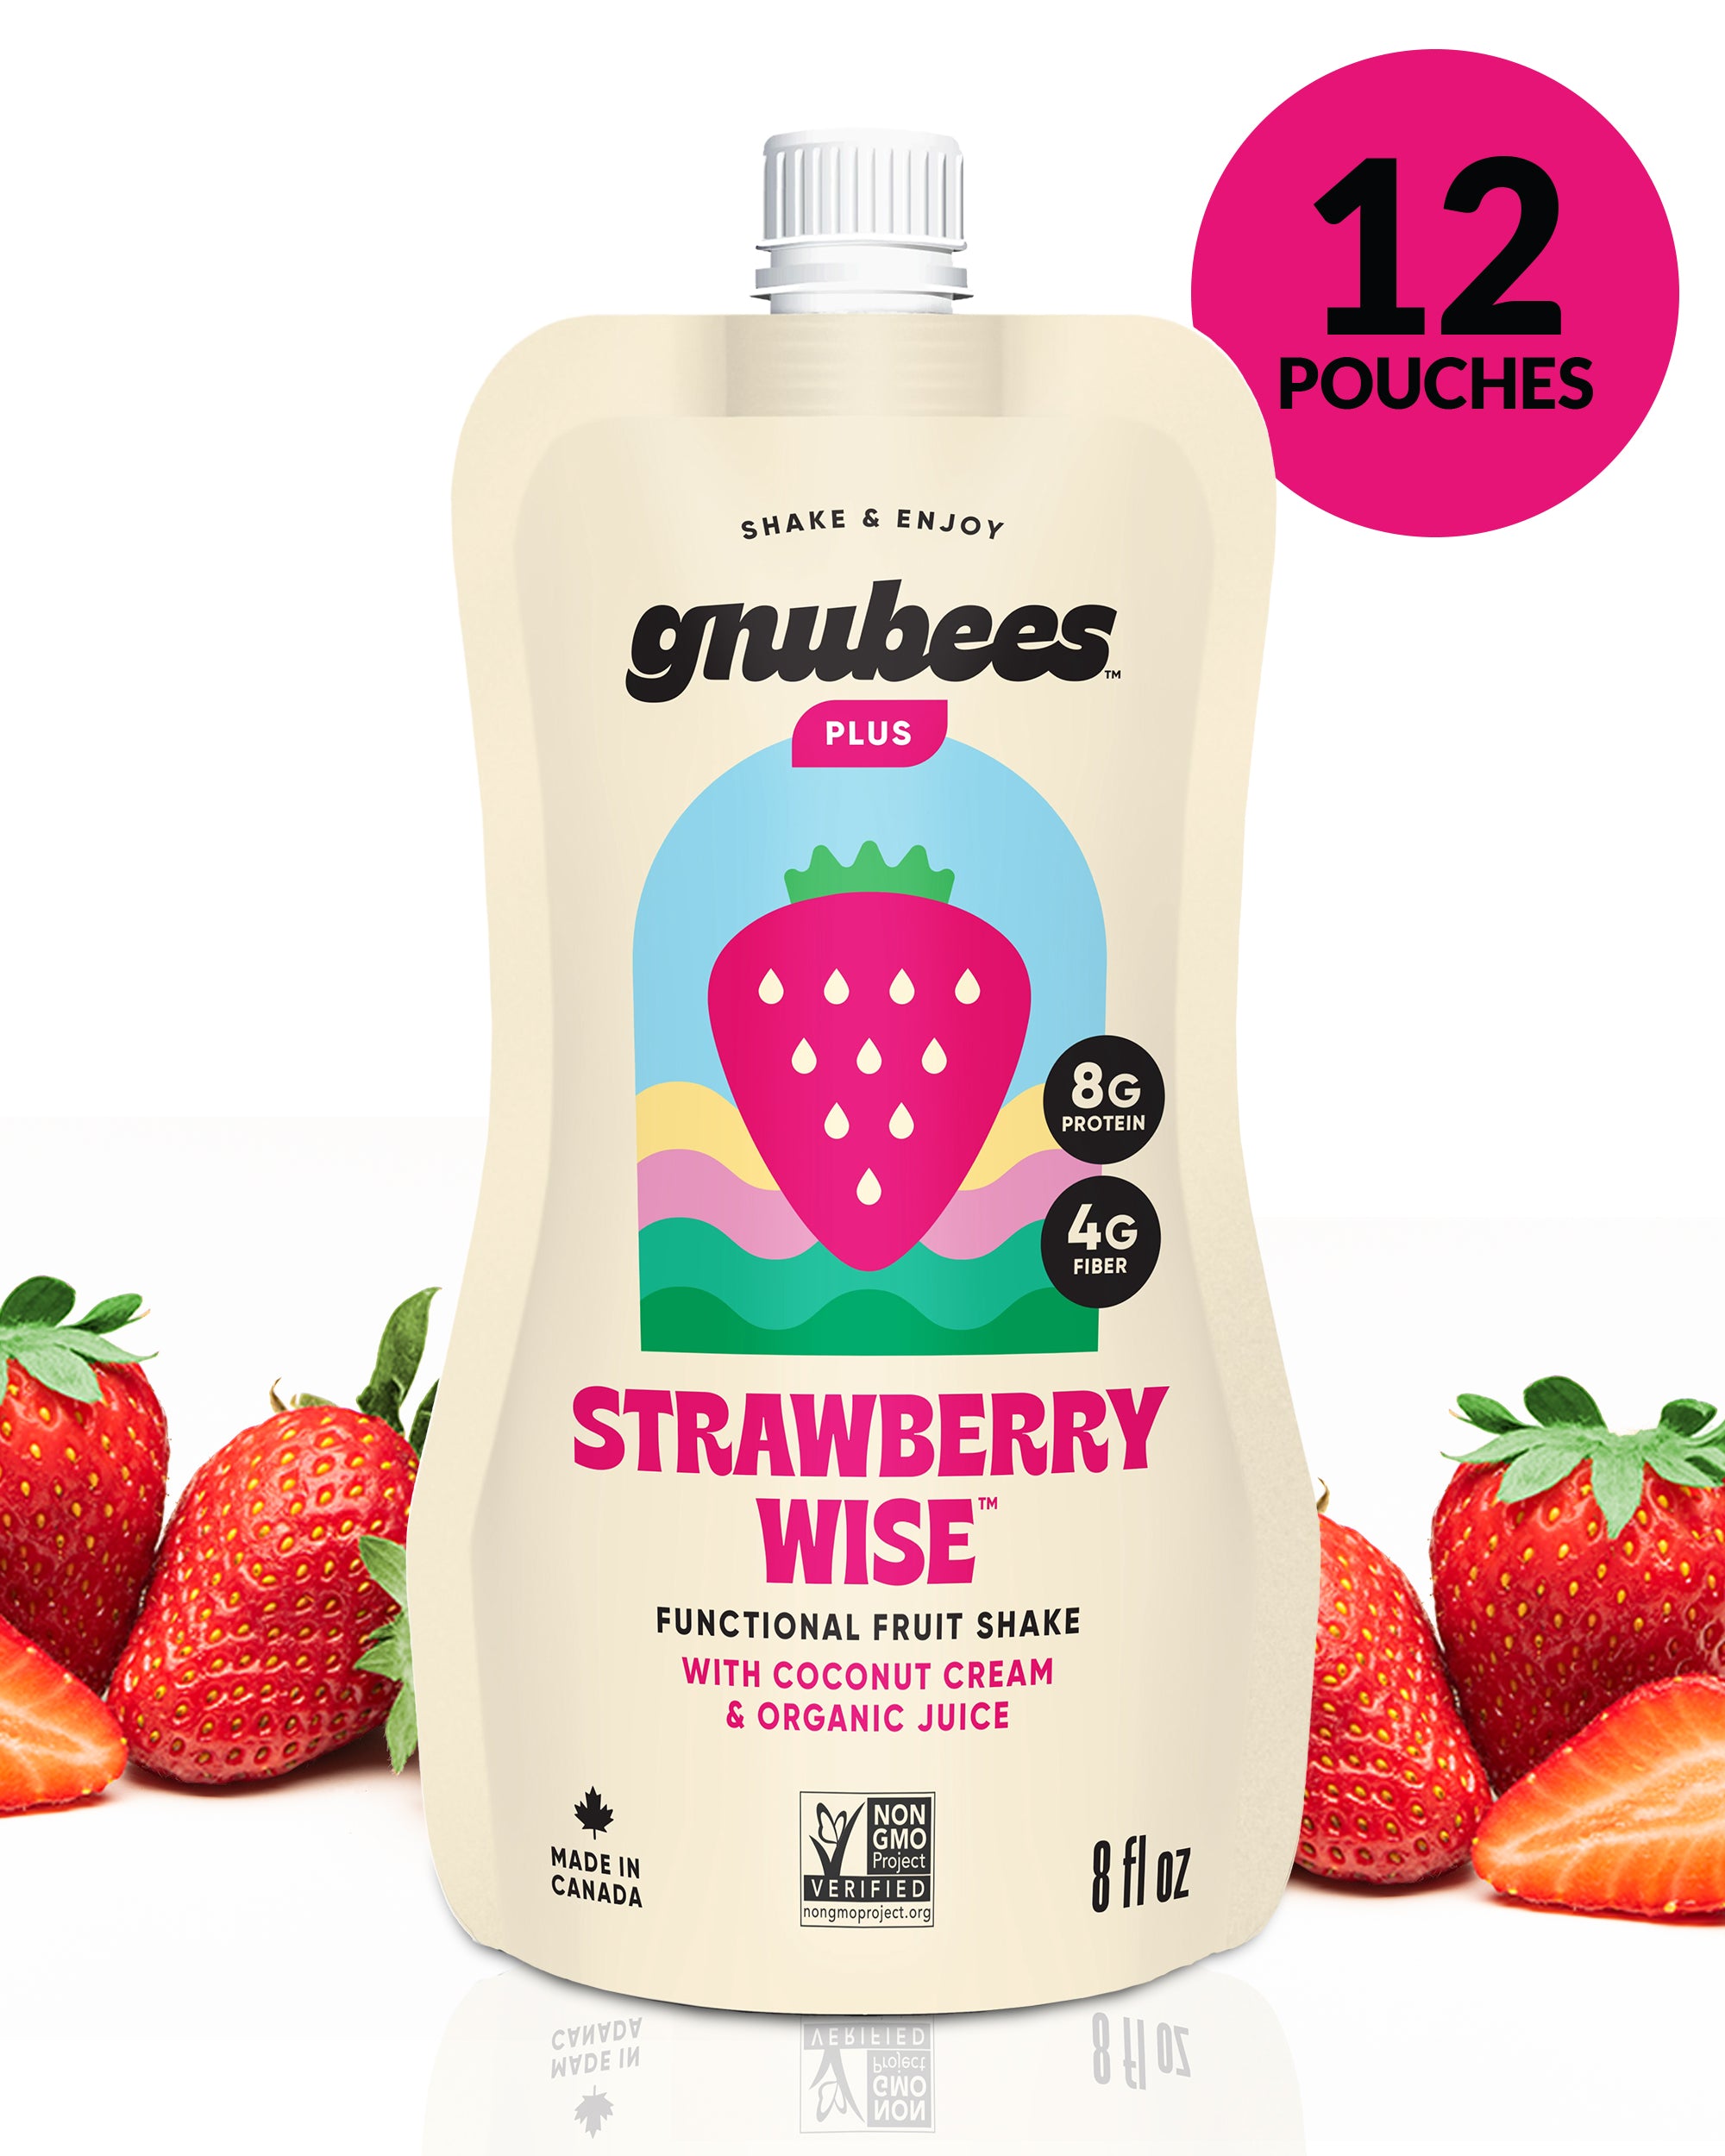 Strawberry Wise - 12 pouches per case